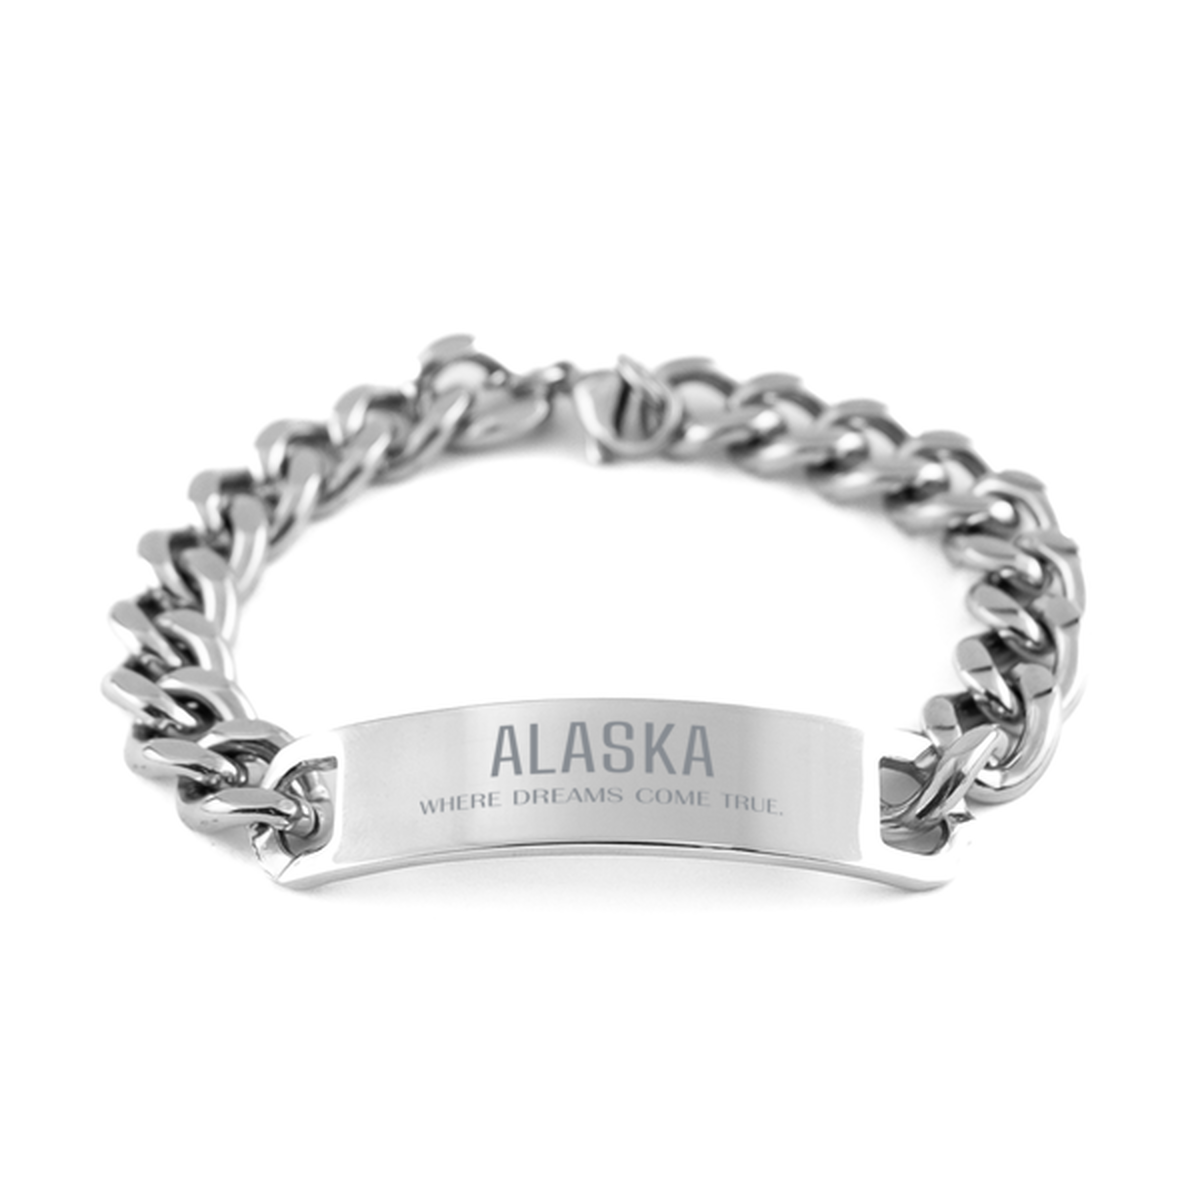 Love Alaska State Cuban Chain Stainless Steel Bracelet, Alaska Where dreams come true, Birthday Inspirational Gifts For Alaska Men, Women, Friends